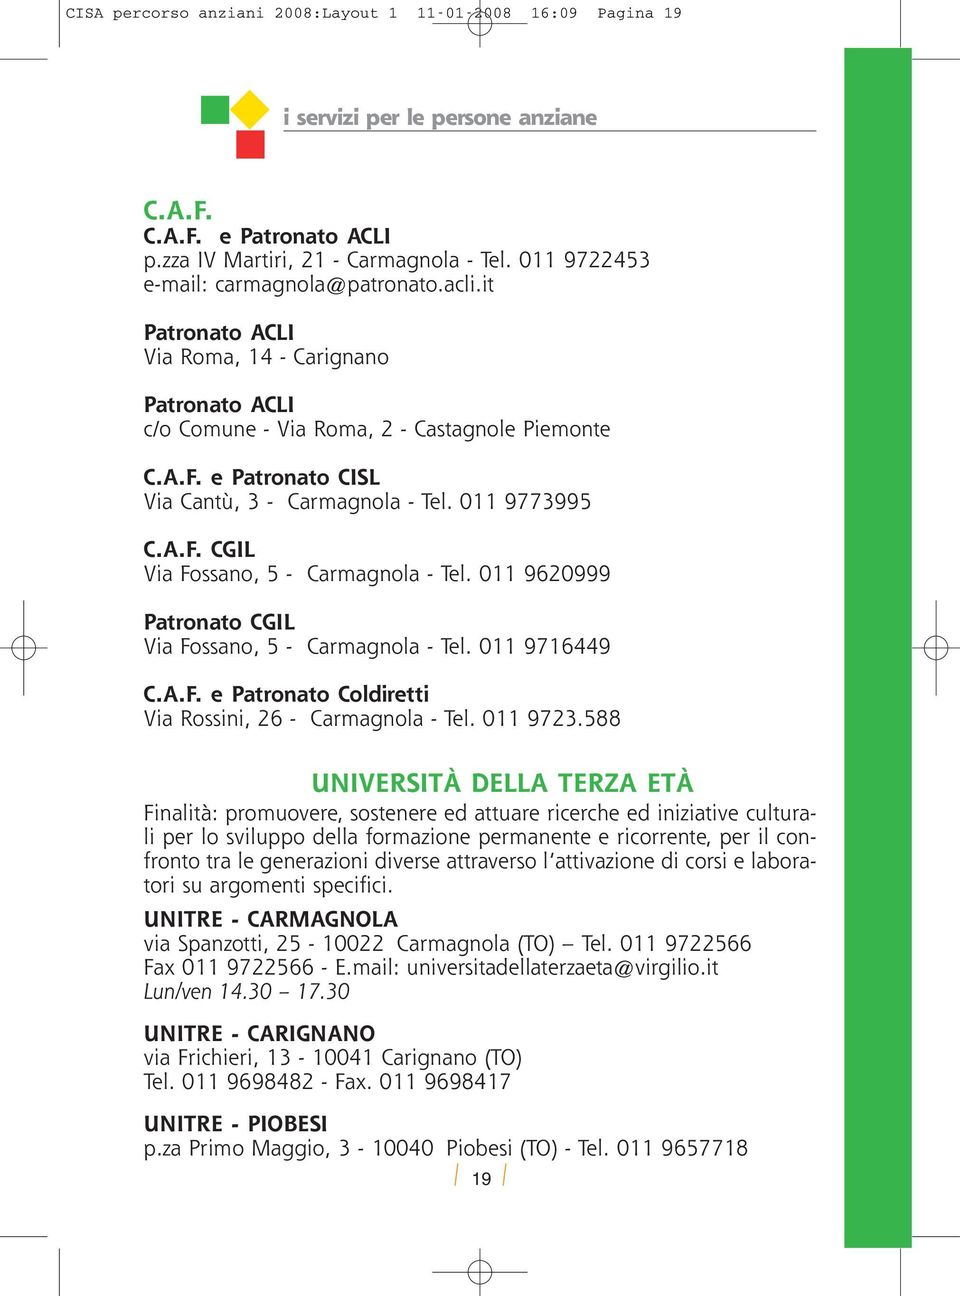 011 9620999 Patronato CGIL Via Fossano, 5 - Carmagnola - Tel. 011 9716449 C.A.F. e Patronato Coldiretti Via Rossini, 26 - Carmagnola - Tel. 011 9723.